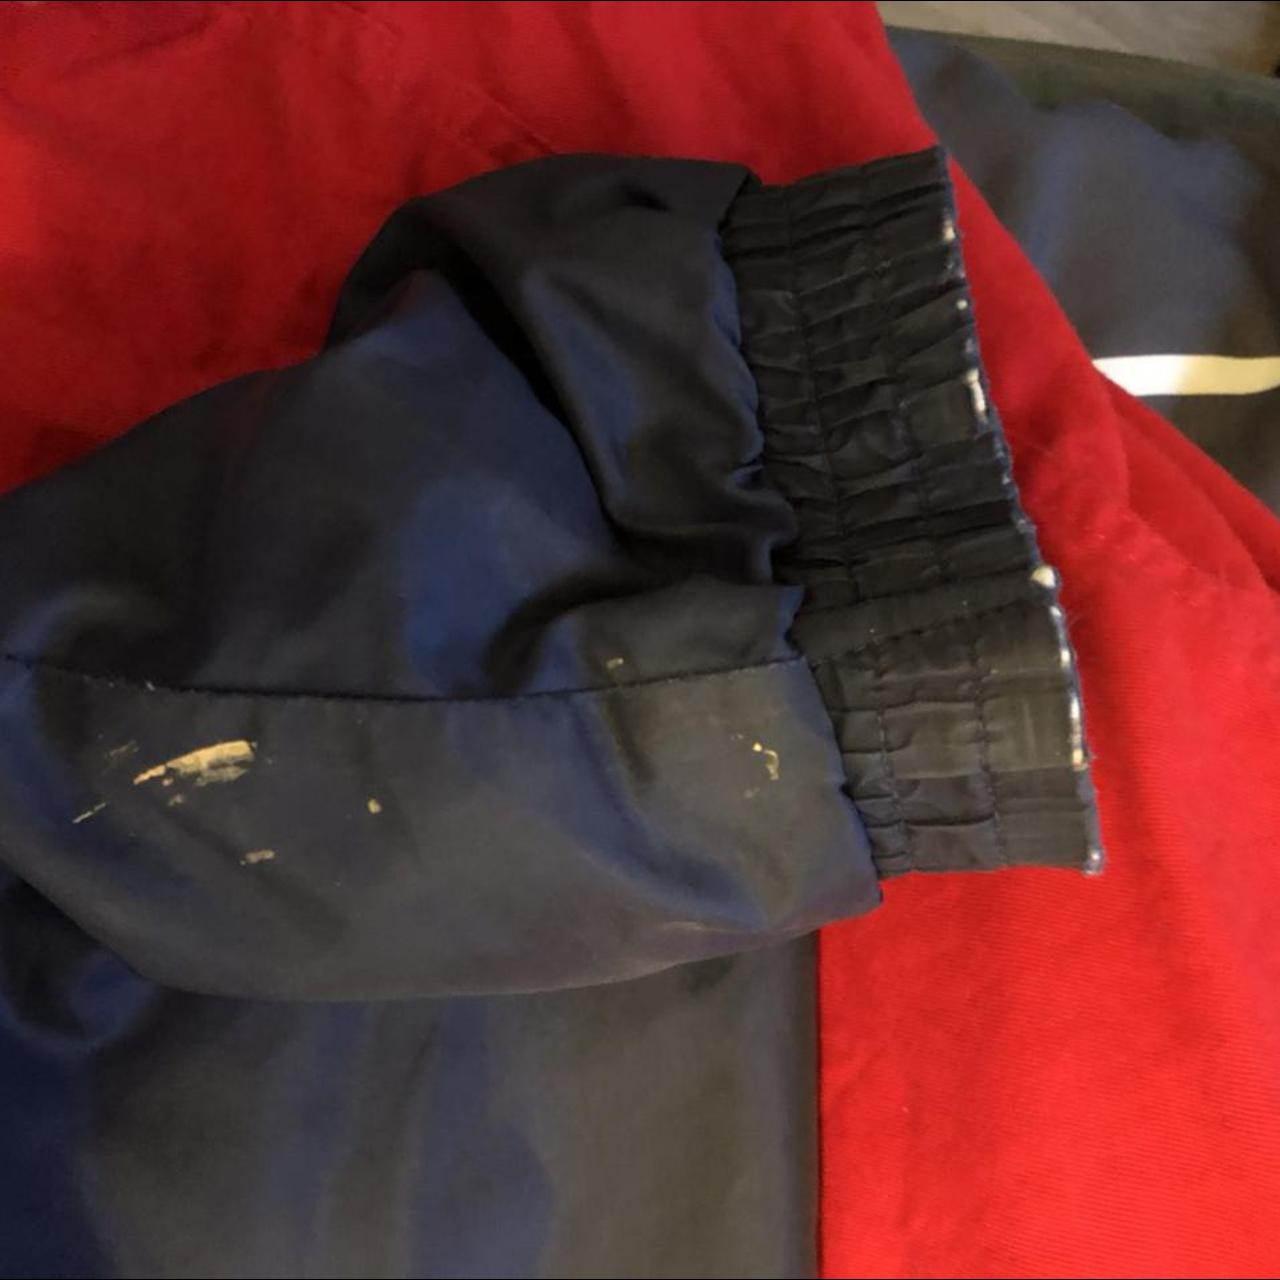 Product Image 3 - CBS Sports Windbreaker Jacket 📺🏈
Condition: